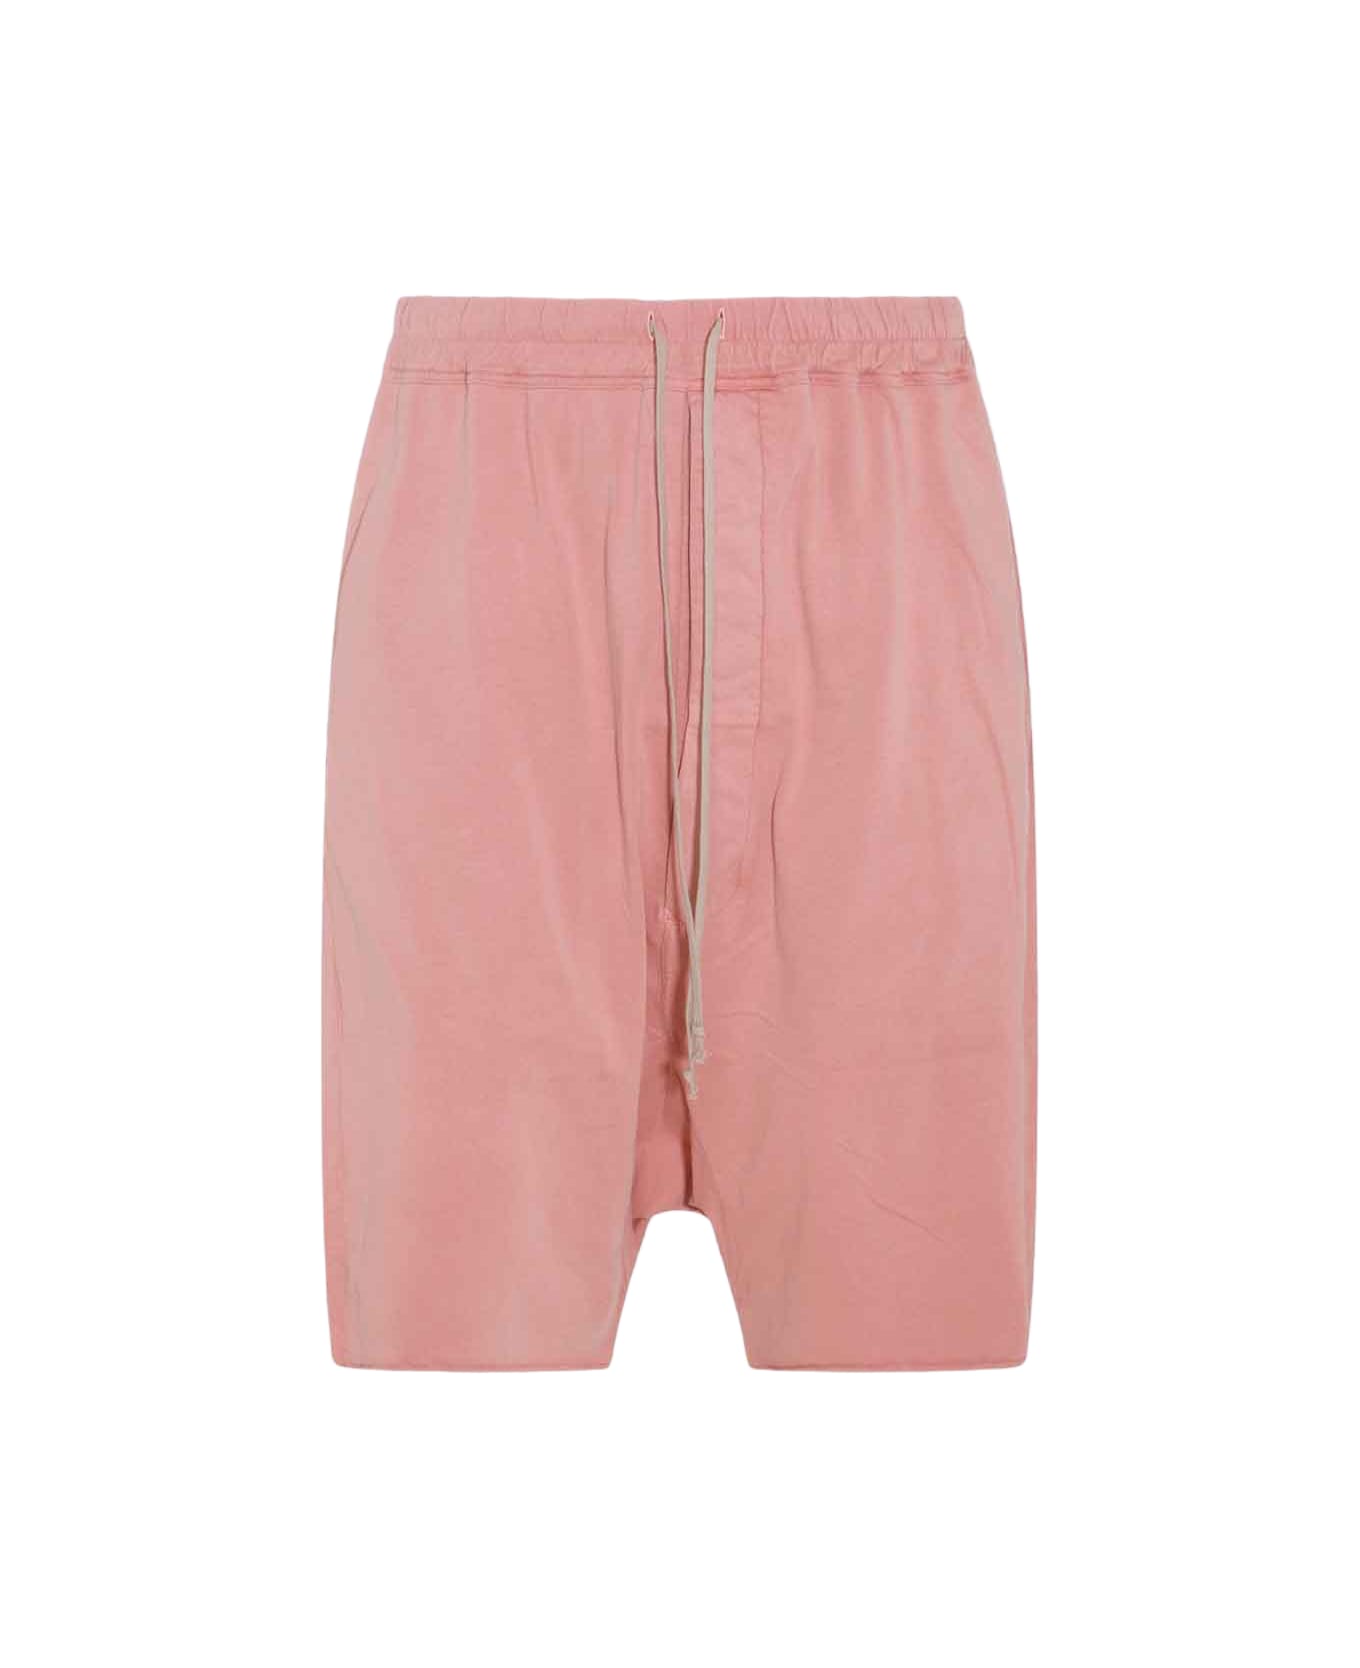 DRKSHDW Pink Cotton Shorts - Pink